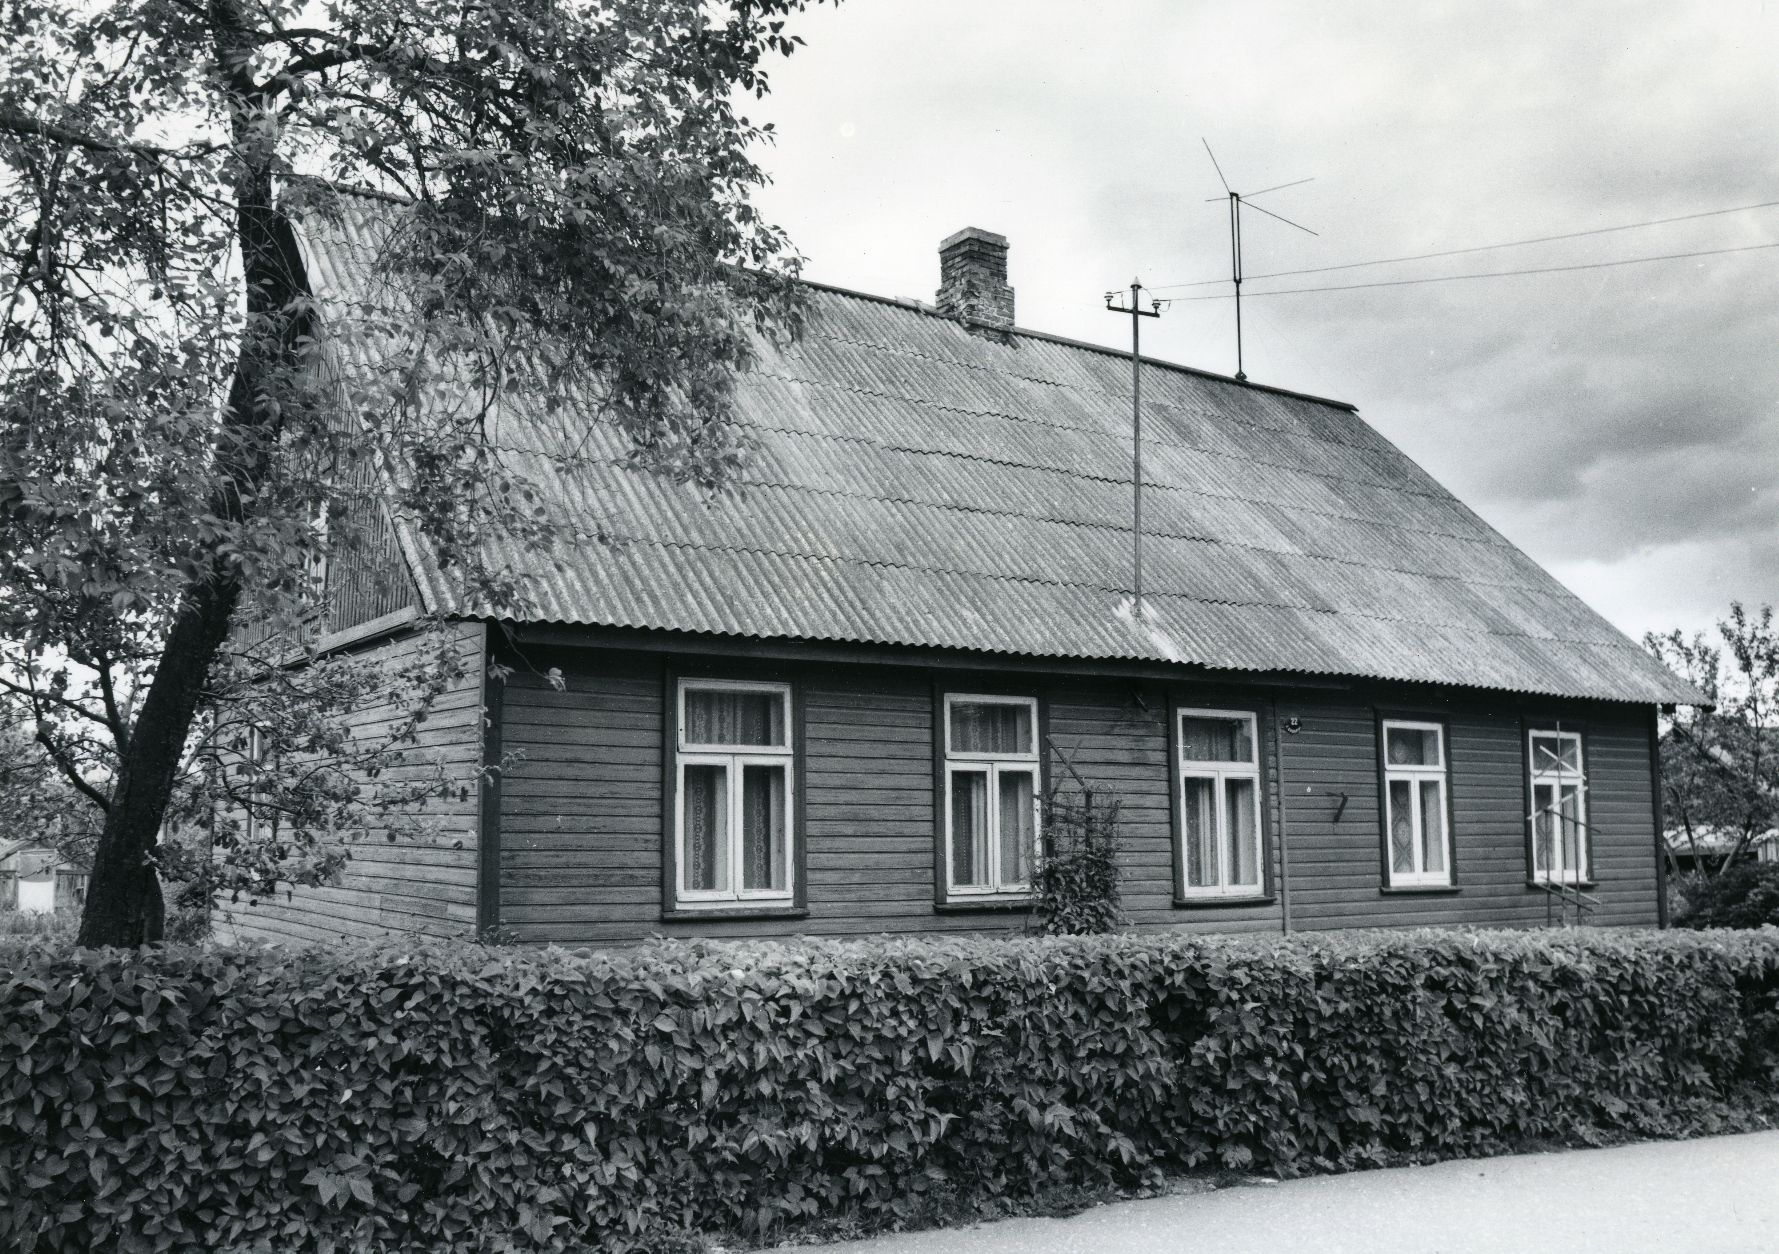 Emmeline Kilgi private school in Jõgeval Gagarini 22 where Betti Alver received his first school in 1982.